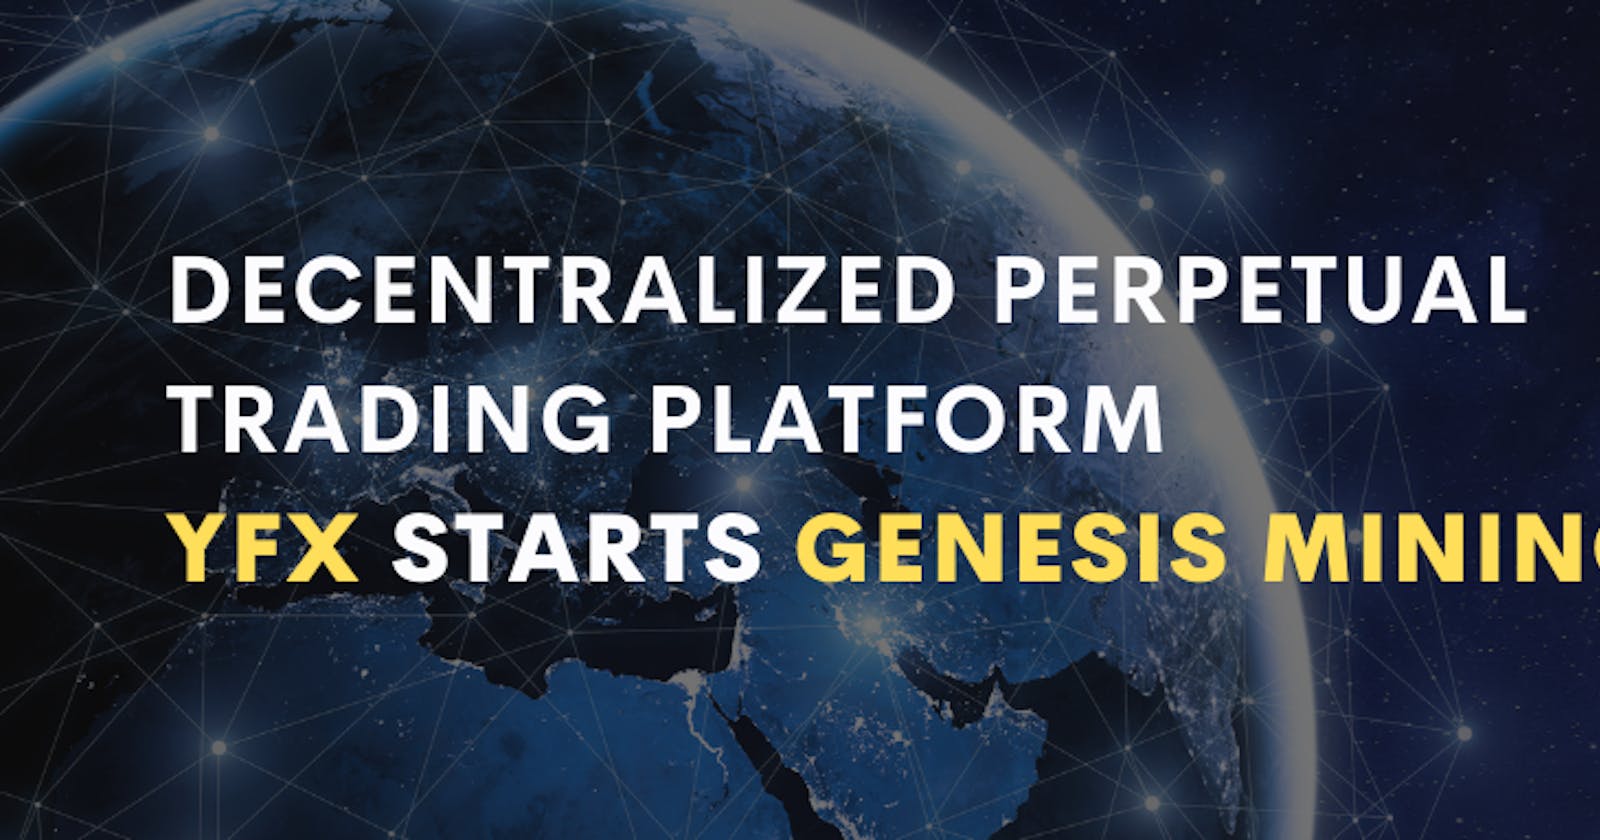 Decentralized Perpetual Trading Platform YFX starts Genesis Mining